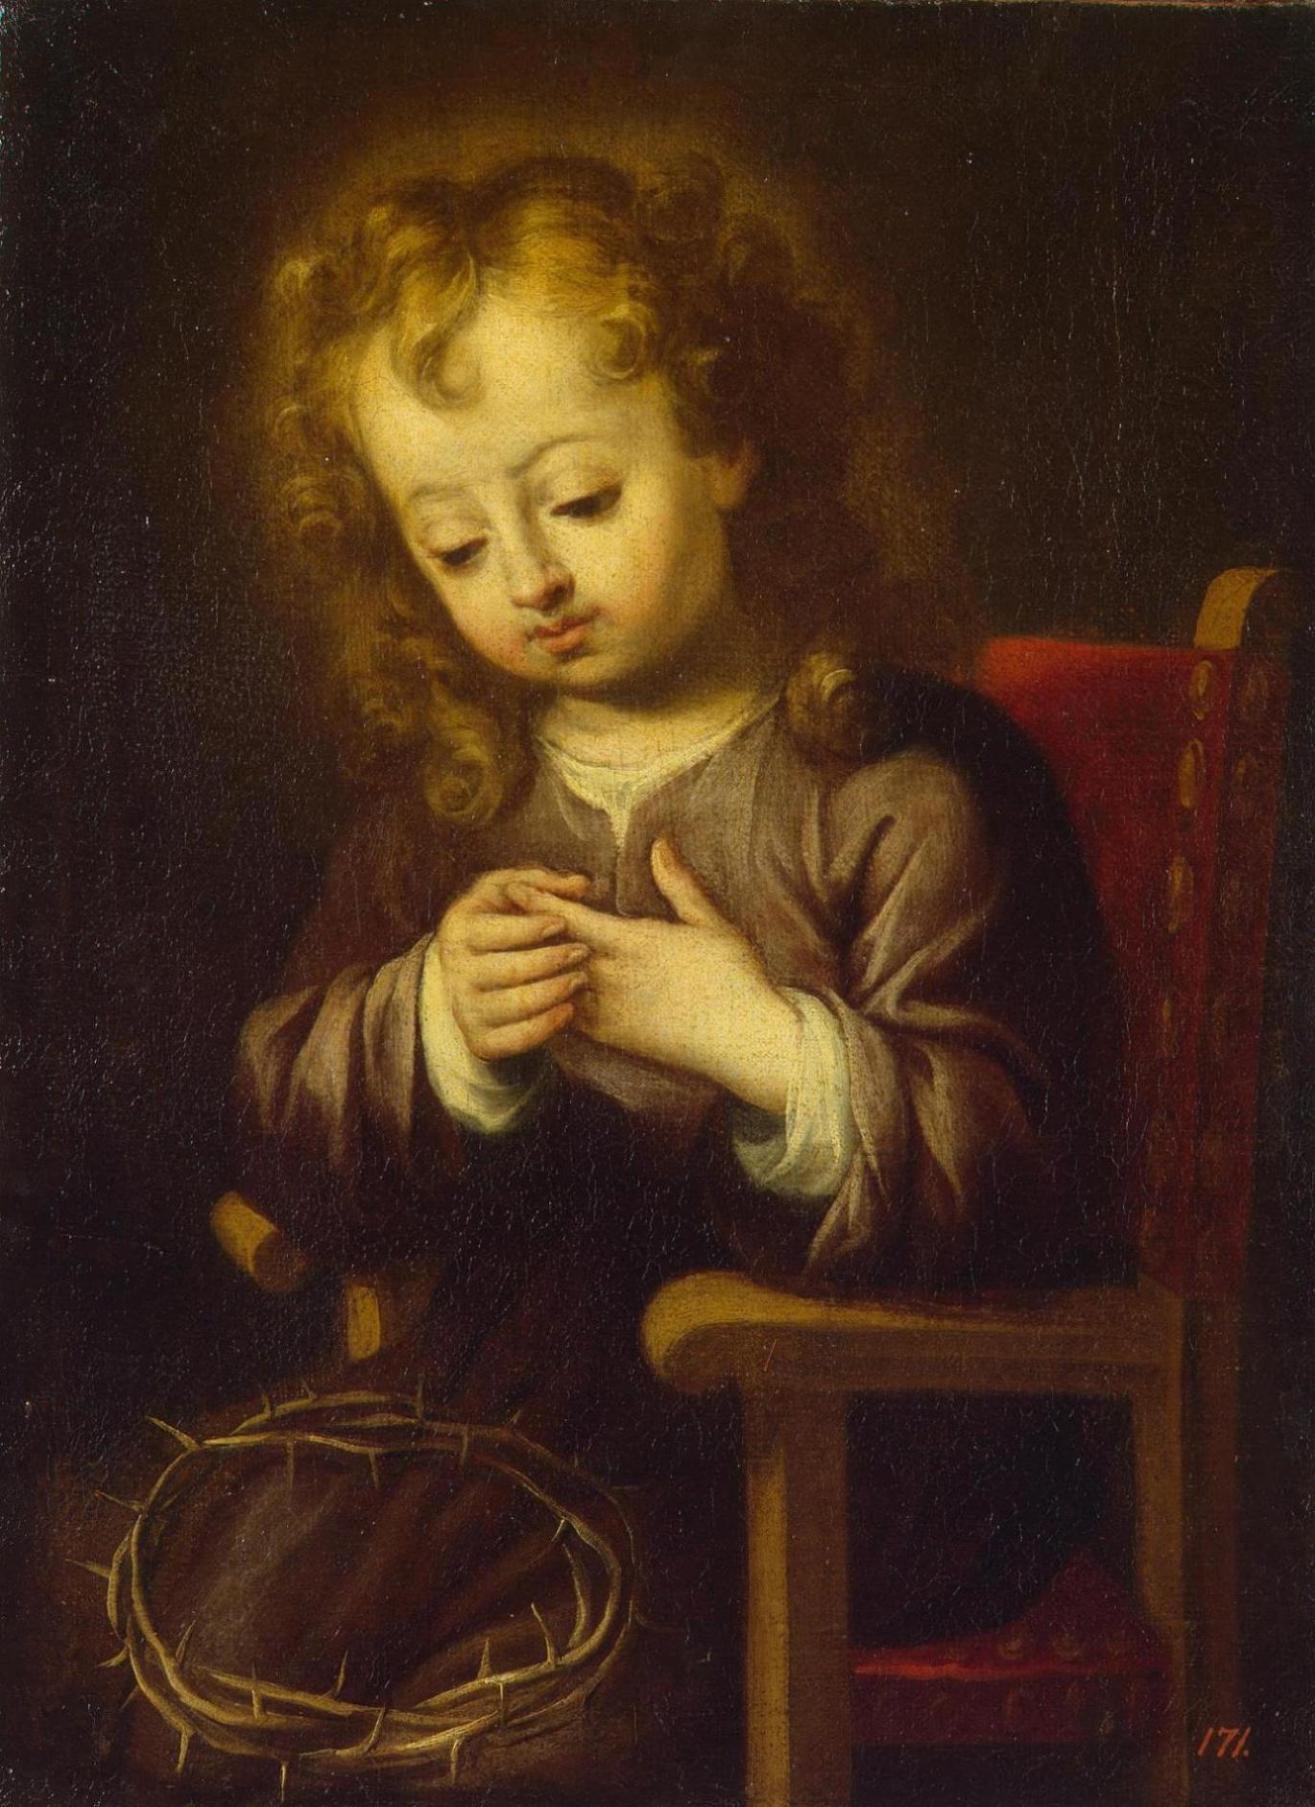 Мурильо. Бартоломе Эстебан Мурильо. Бартоломе Эстебан Мурильо дети. Бартоломе Эстебан Мурильо (1617-1682). Бартоломе Эстебан Мурильо младенец Иисус.